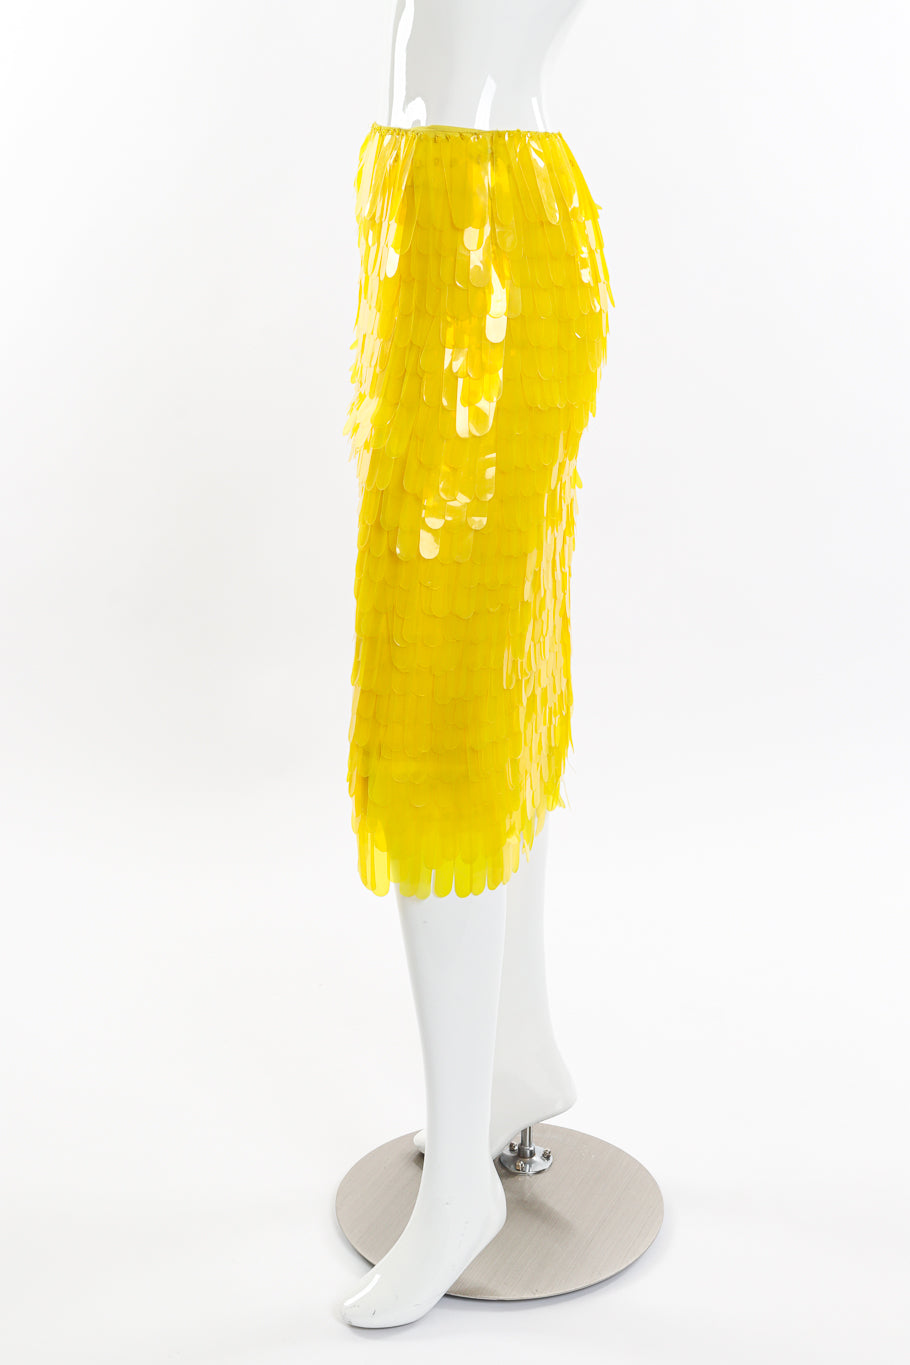 Dries Van Noten 2019 S/S Paillette Midi Skirt side on mannequin @recess la